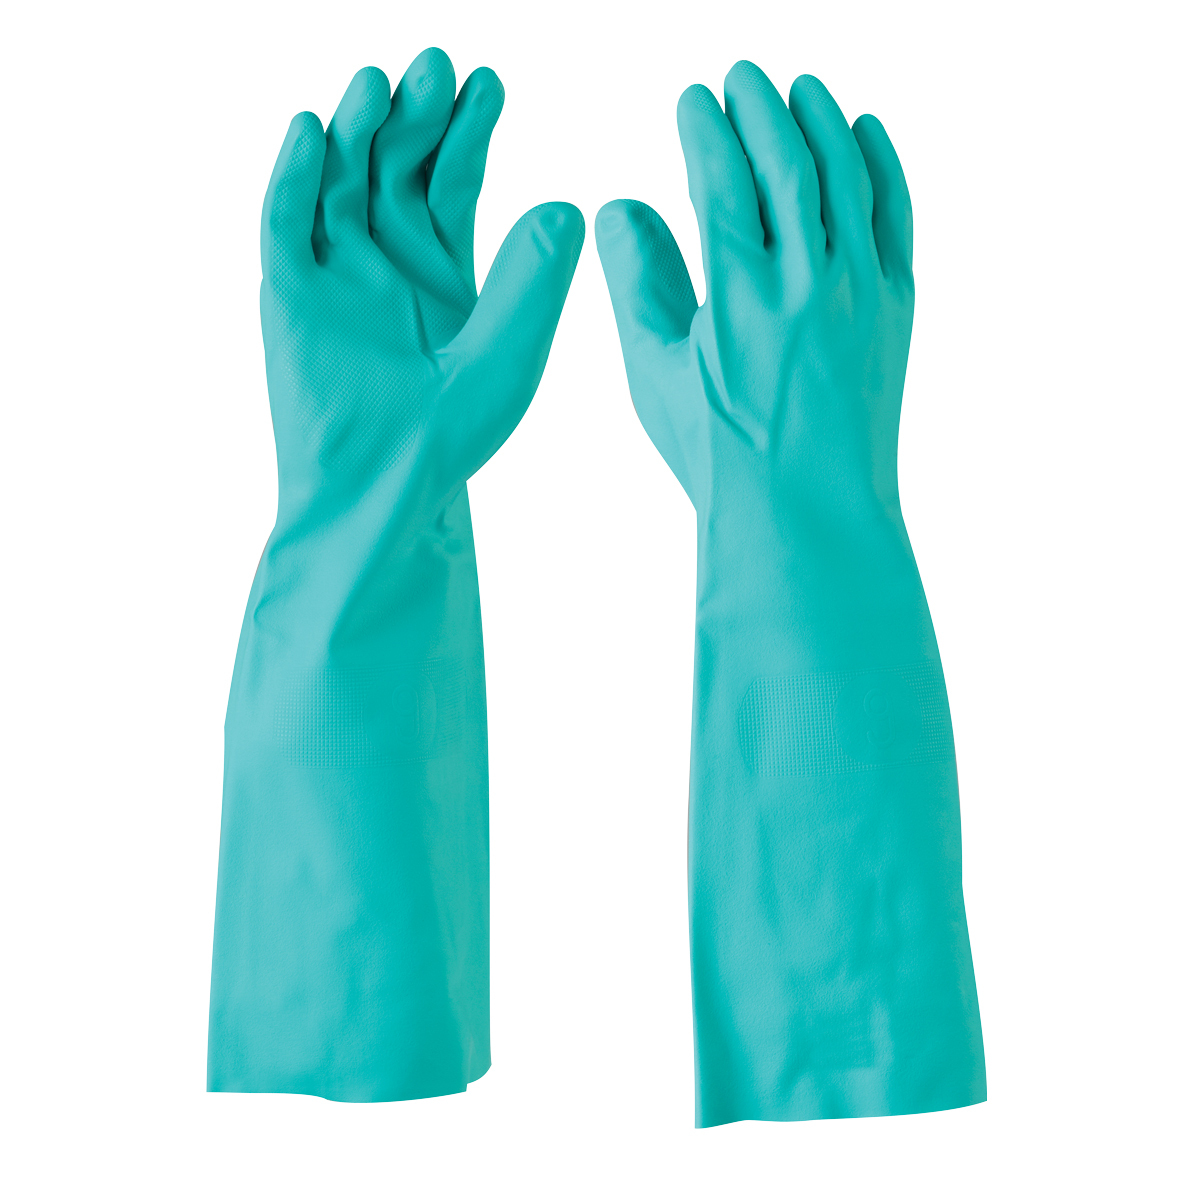 Chemgard Nitrile Gloves